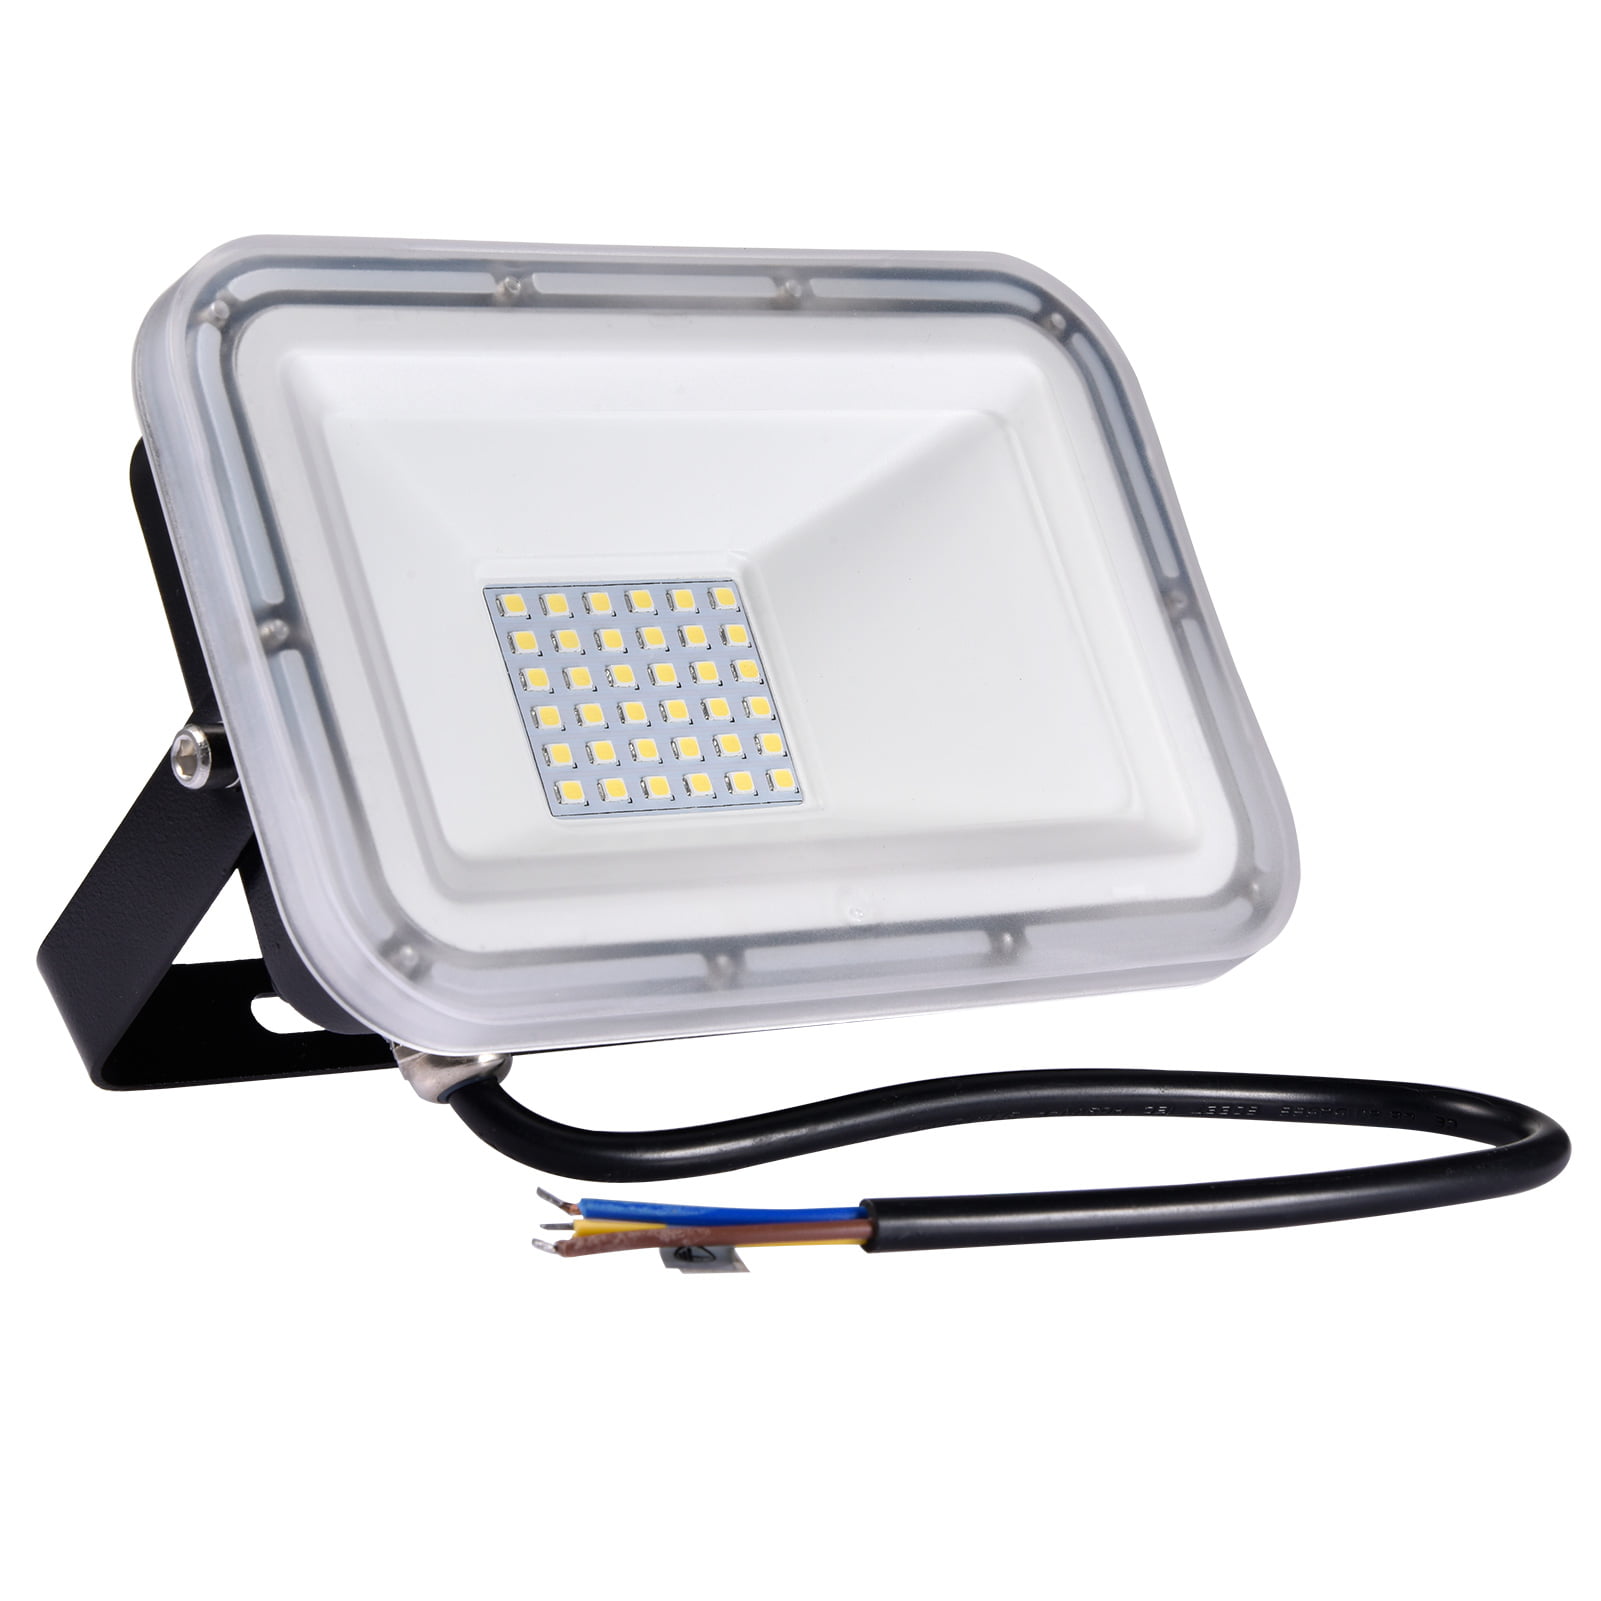 NEW 100W LED Floodlight Outdoor Security Spotlight Warm White Waterproof IP65 UK 